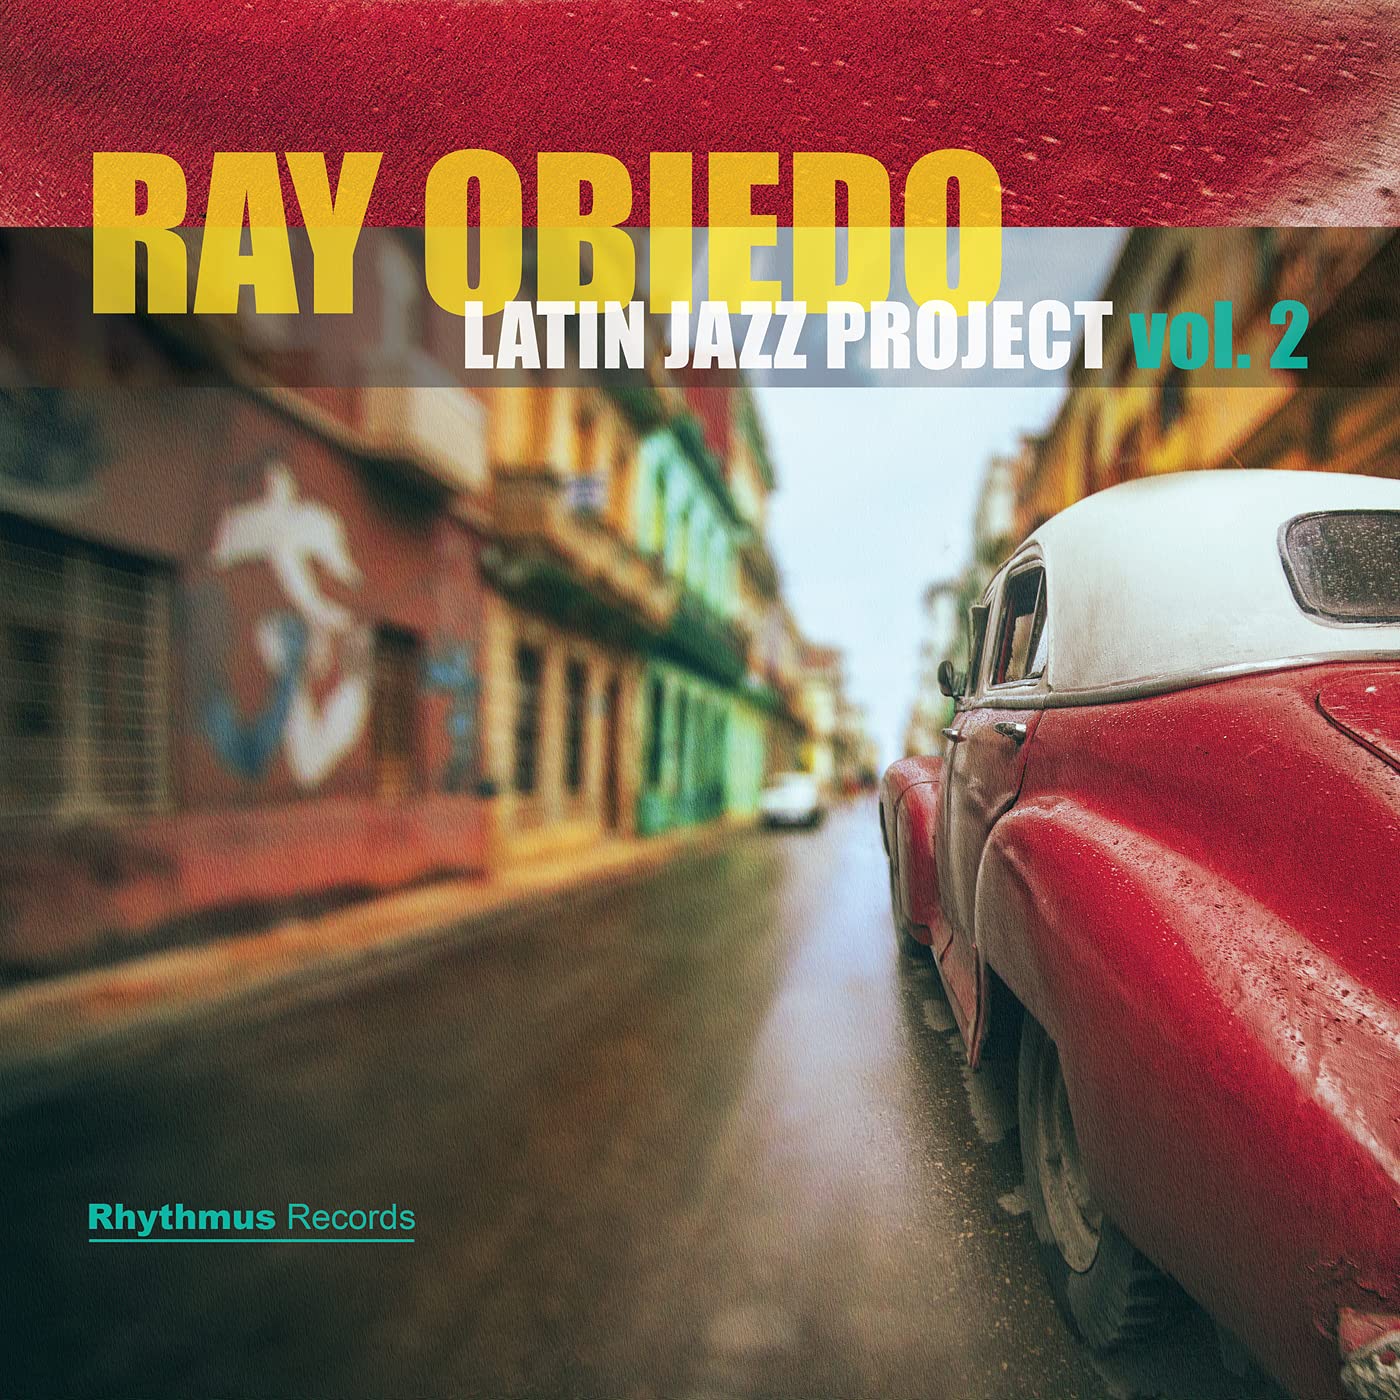 RAY OBIEDO - Latin Jazz Project, Vol. 2 cover 